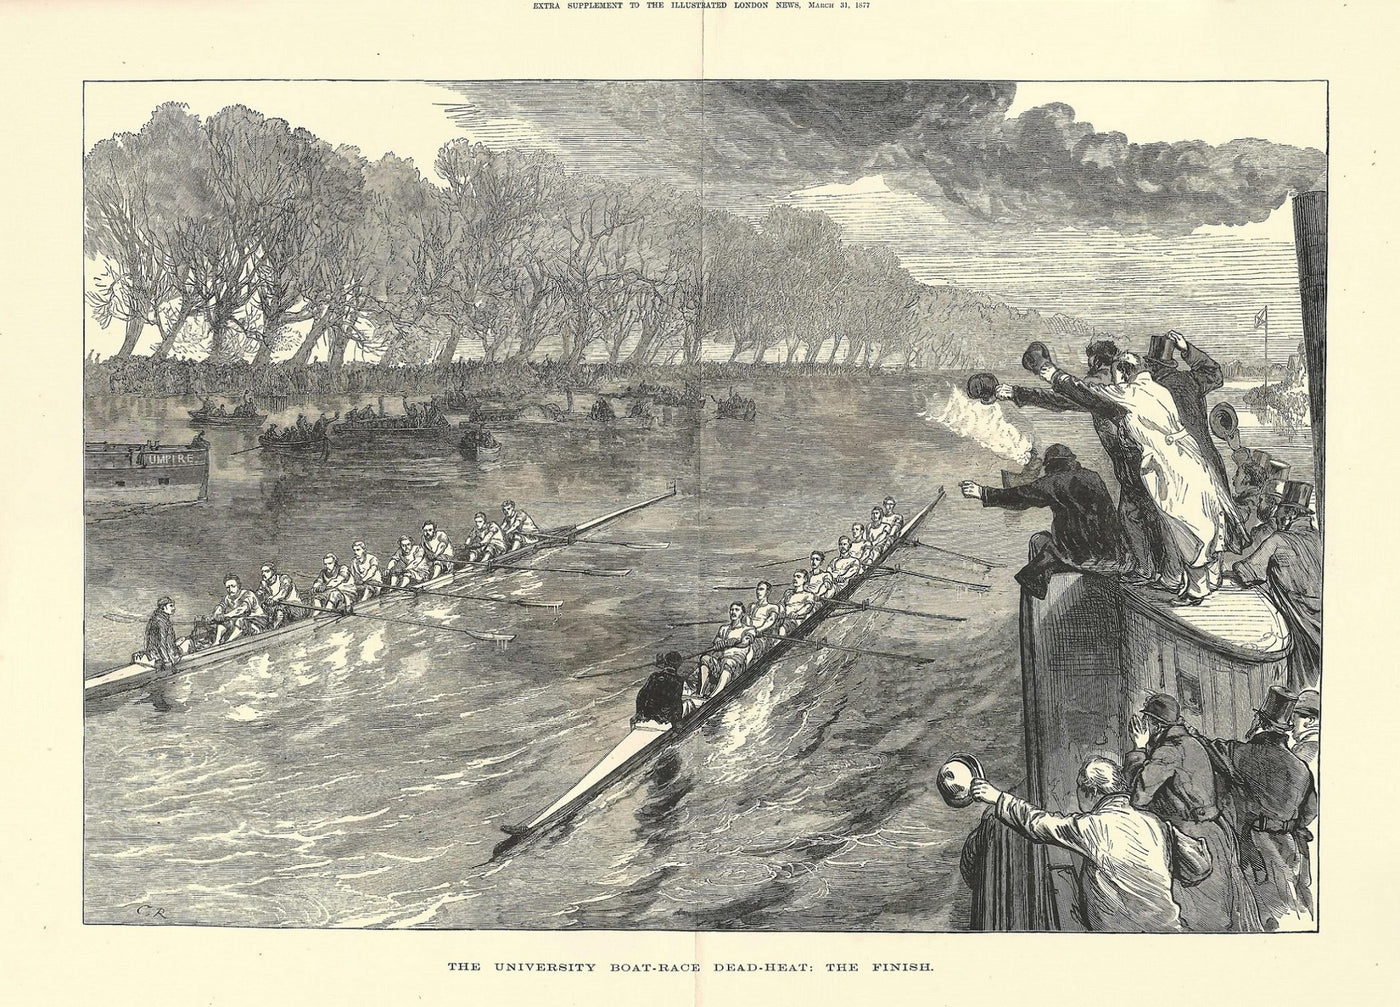 University Boat Race the Dead Heat finish1877